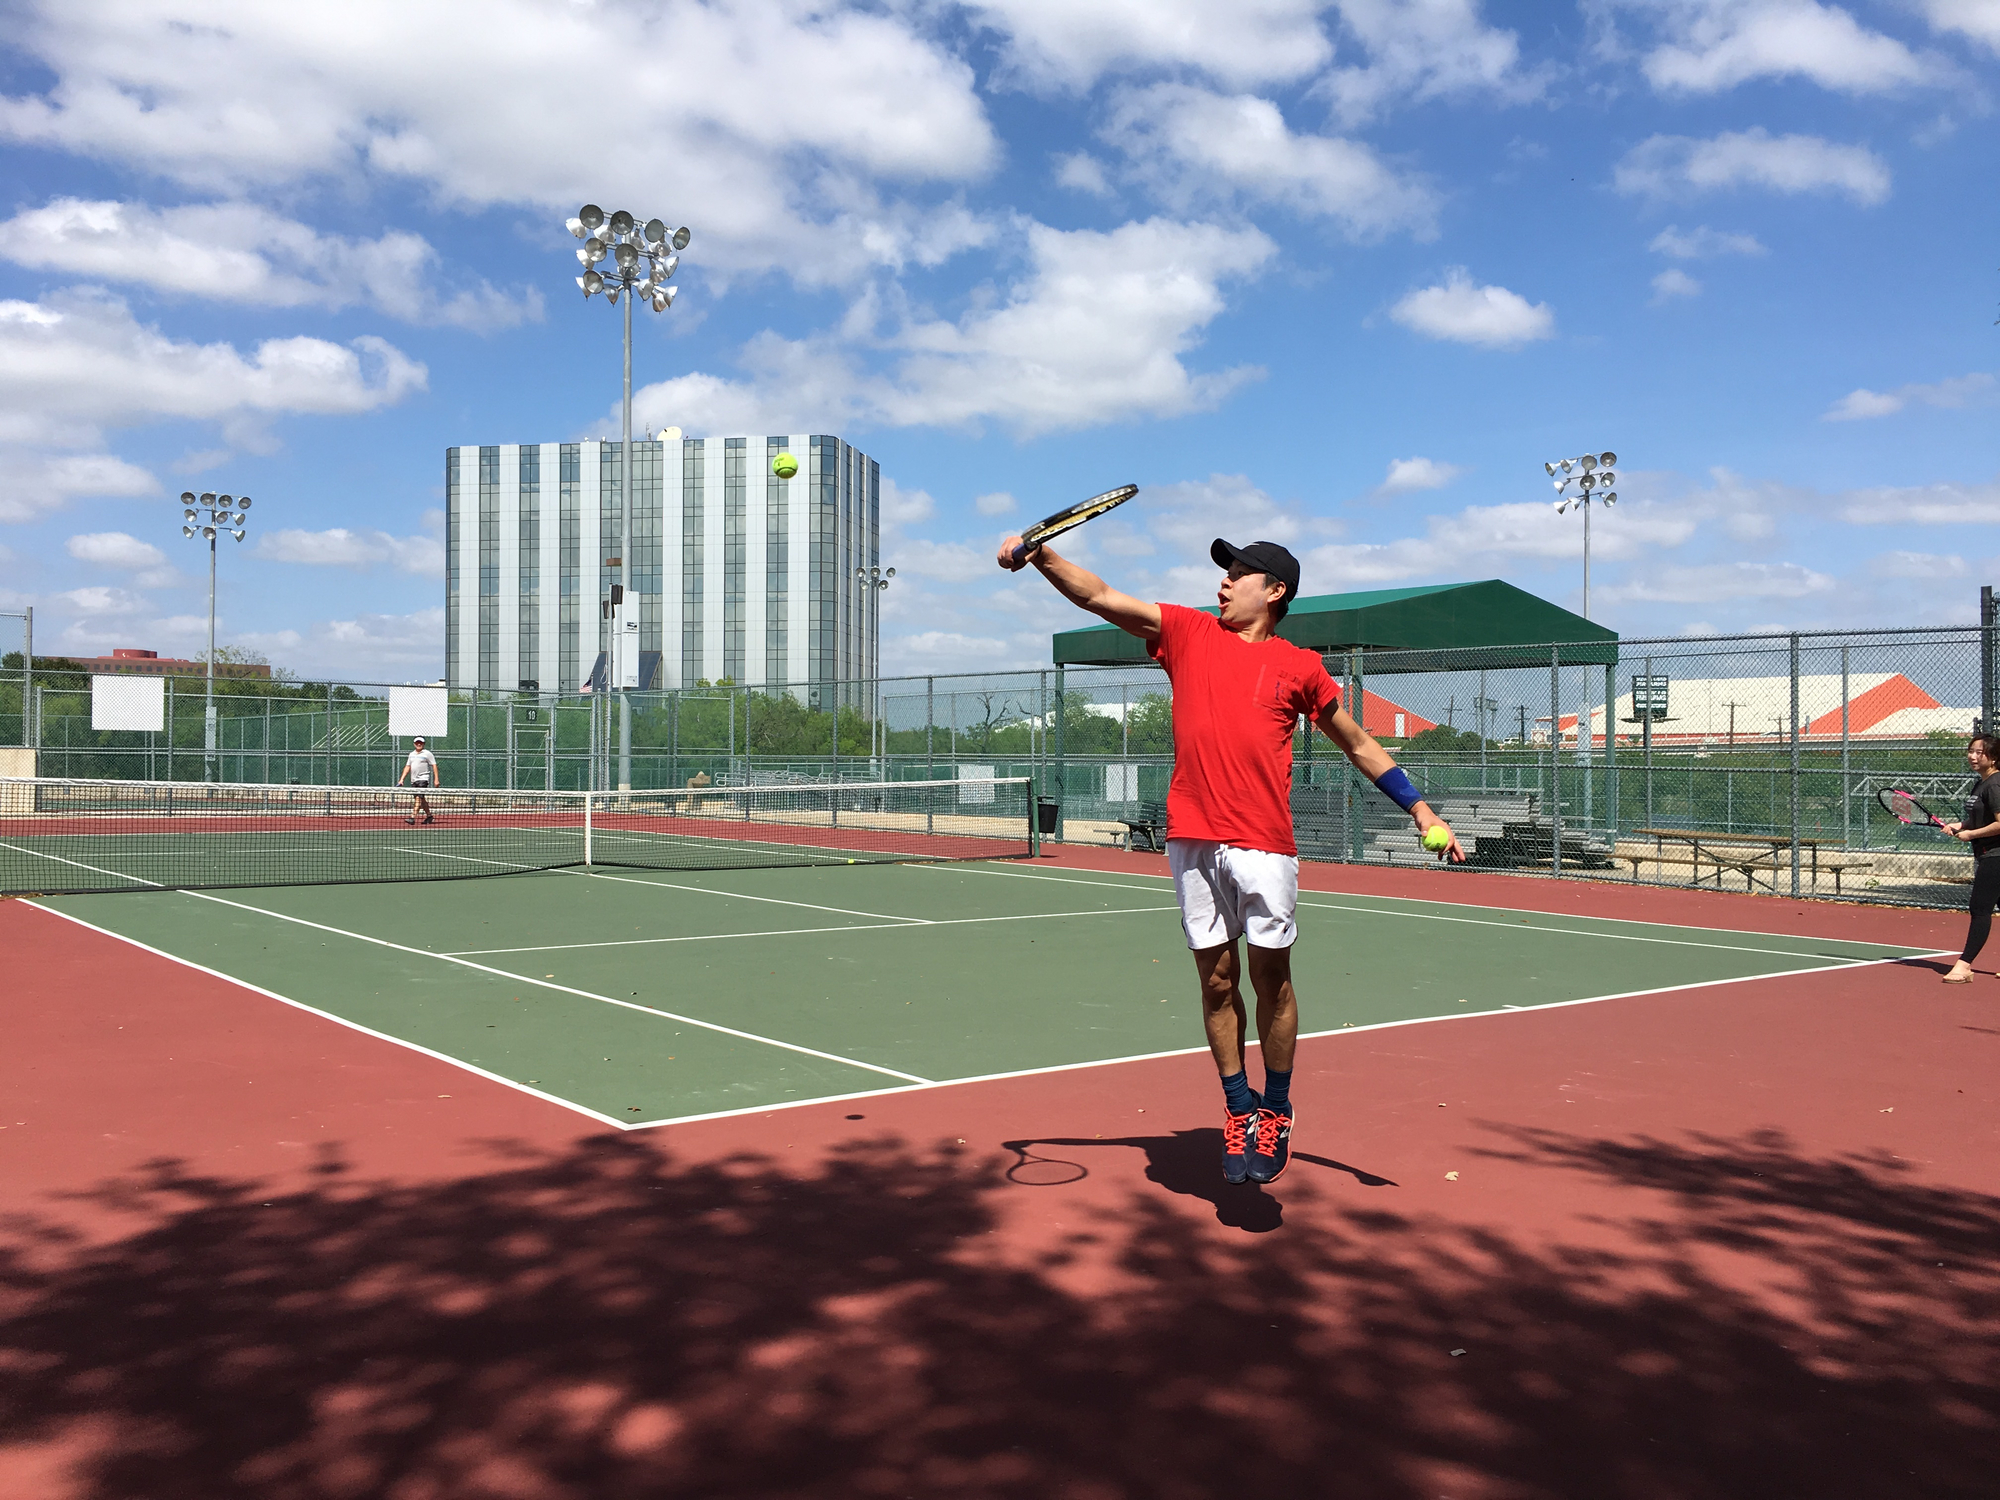 Kevin W. teaches tennis lessons in Shawnee, KS